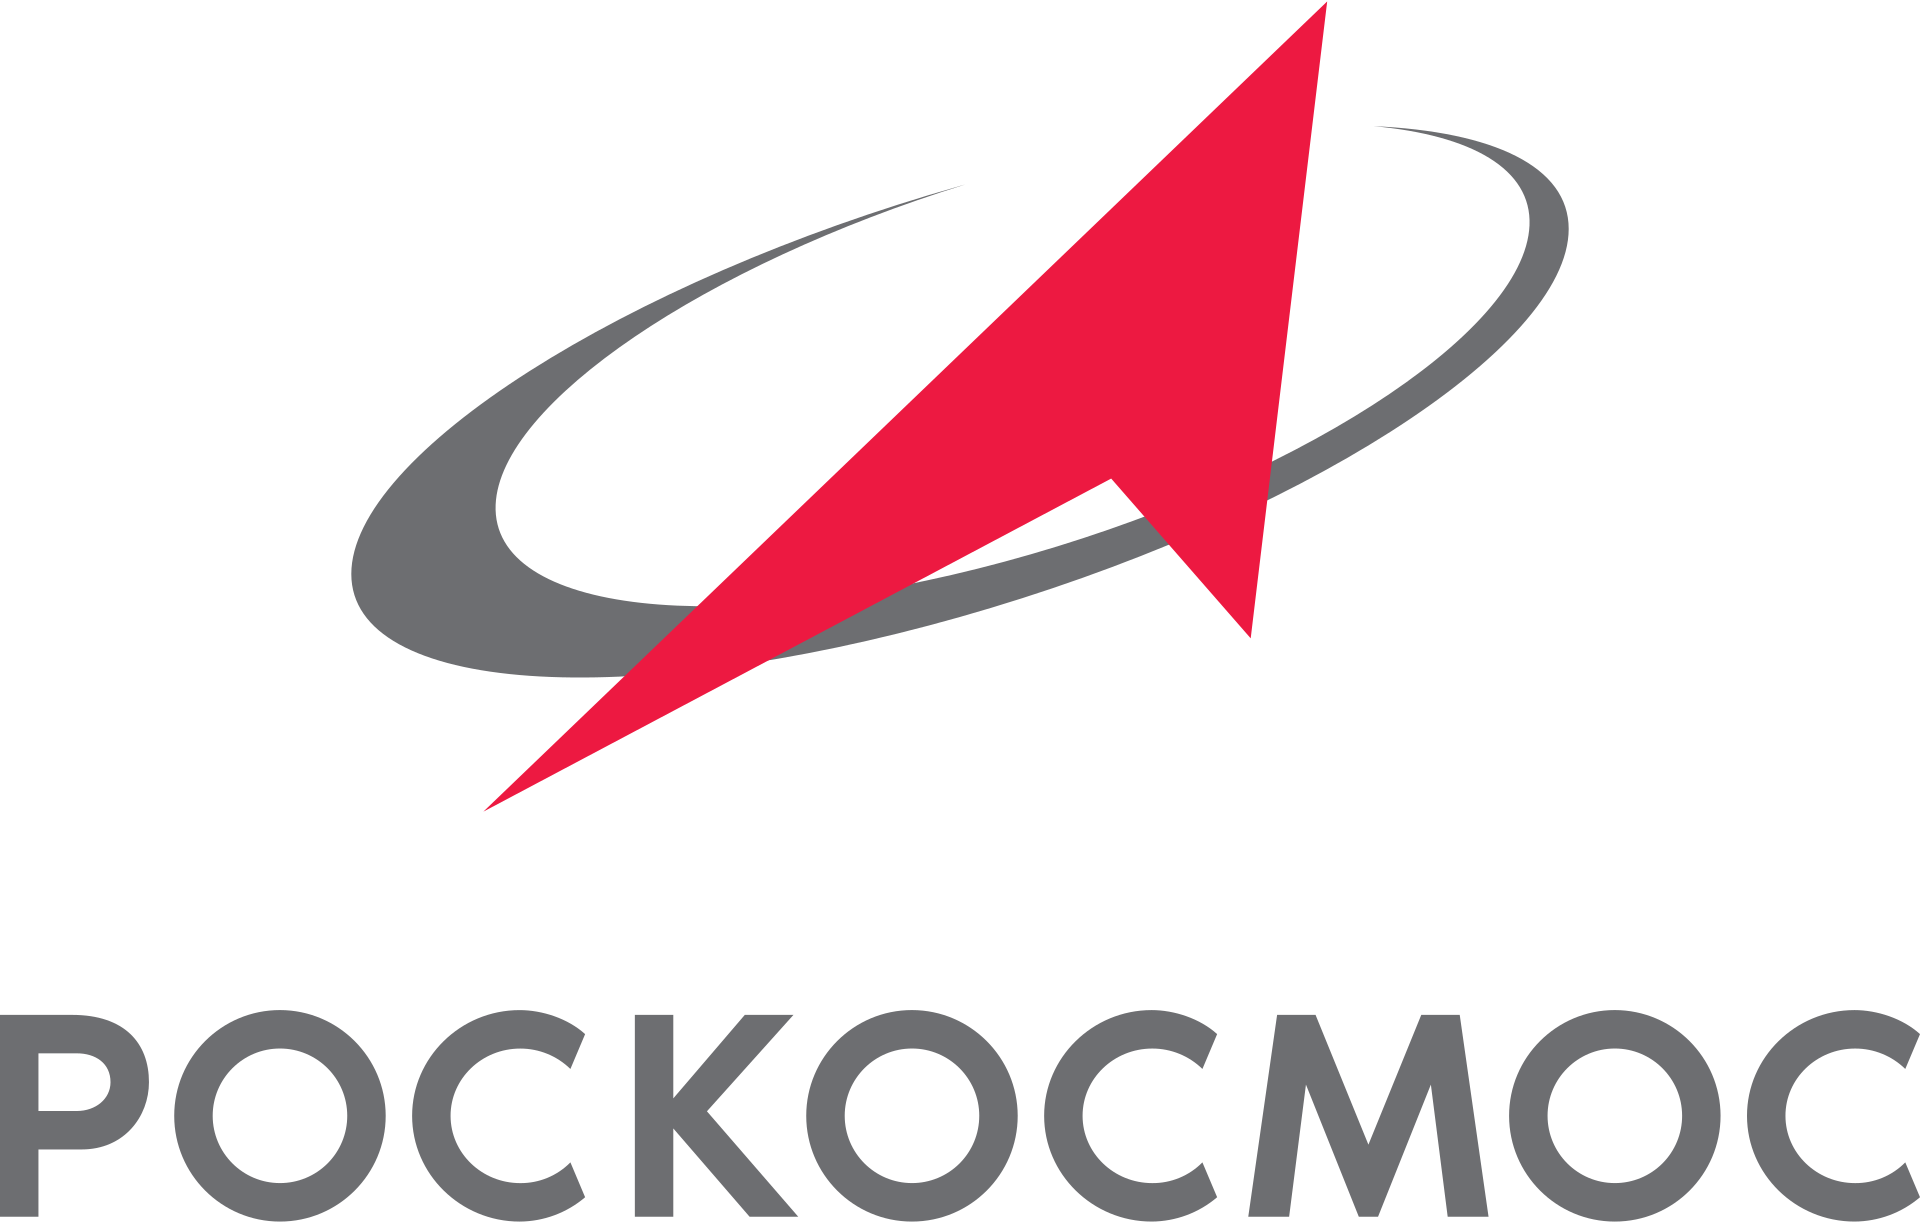 The logo of Roscosmos.